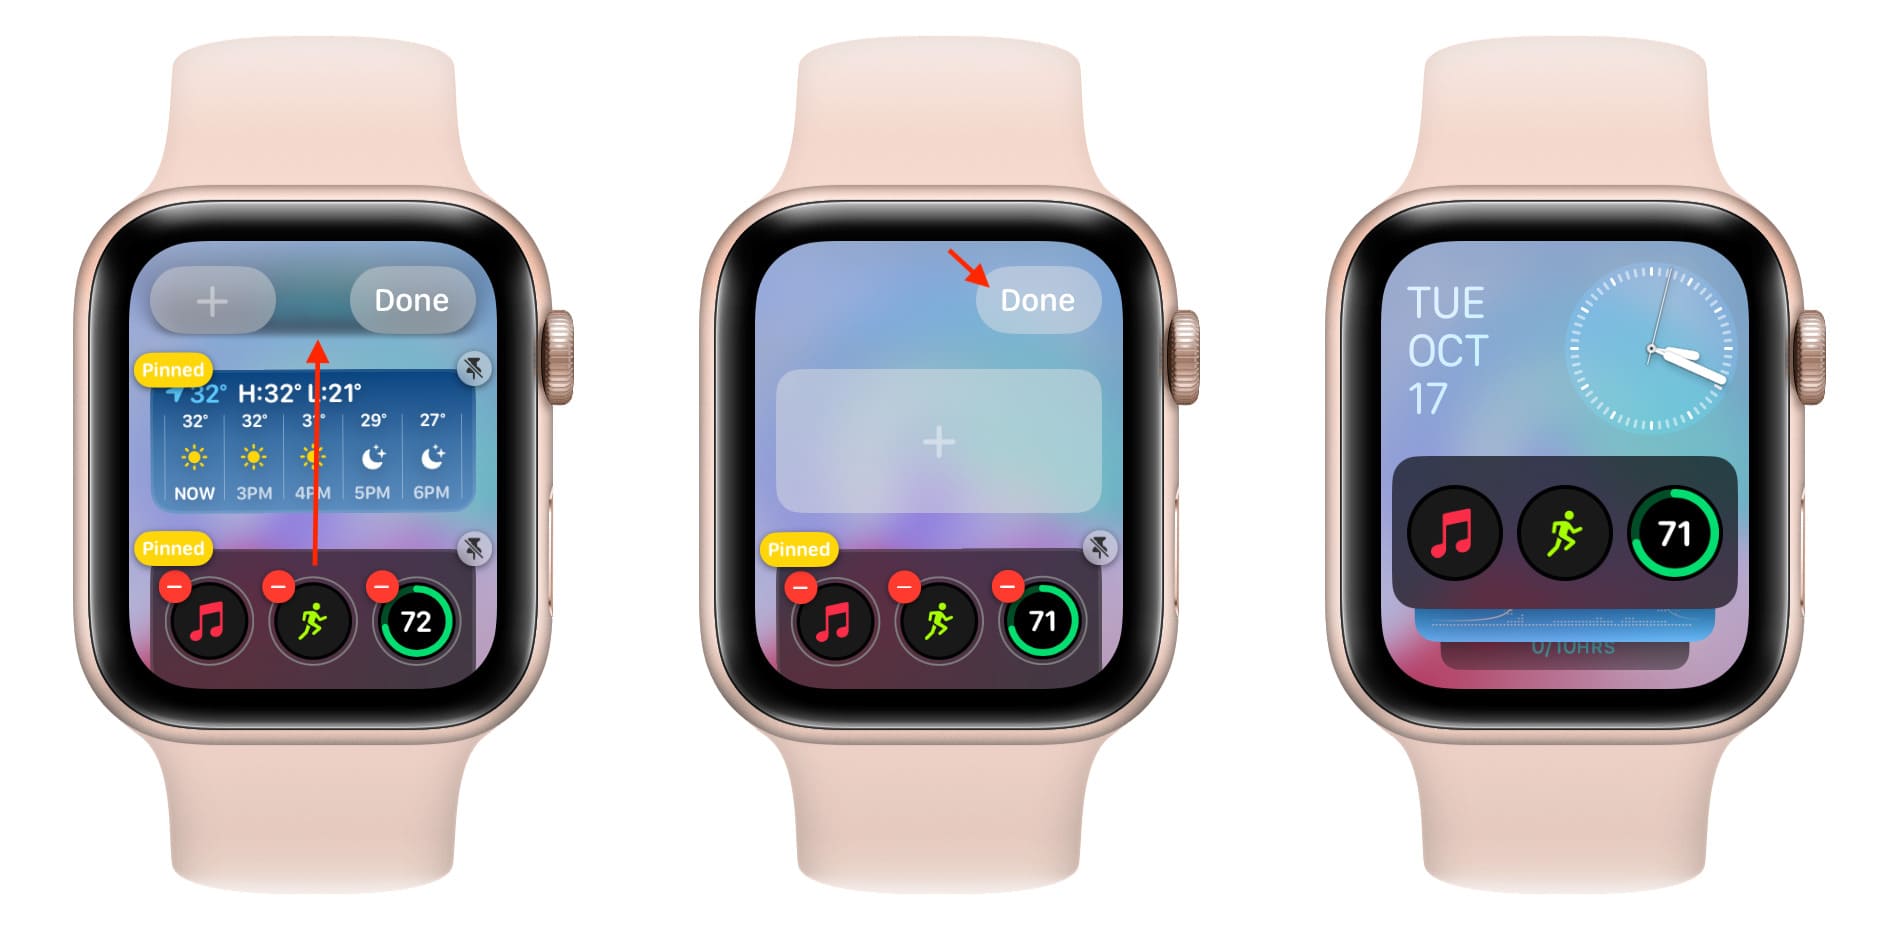 Change order of widgets on Apple Watch